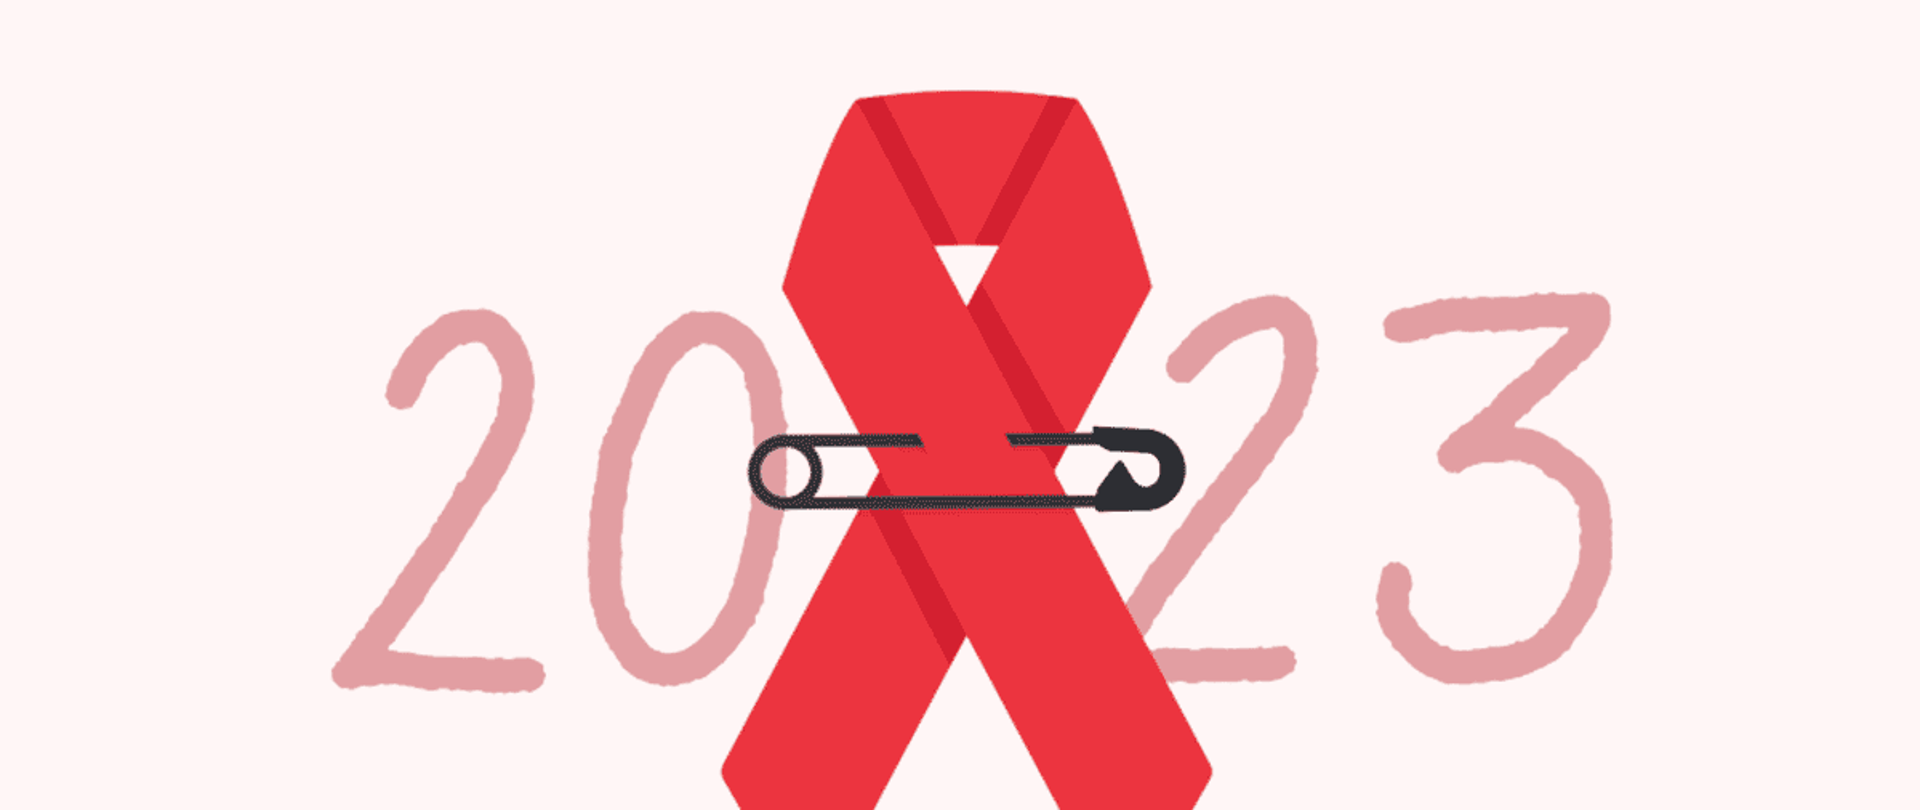 Profilaktyka hiv/aids